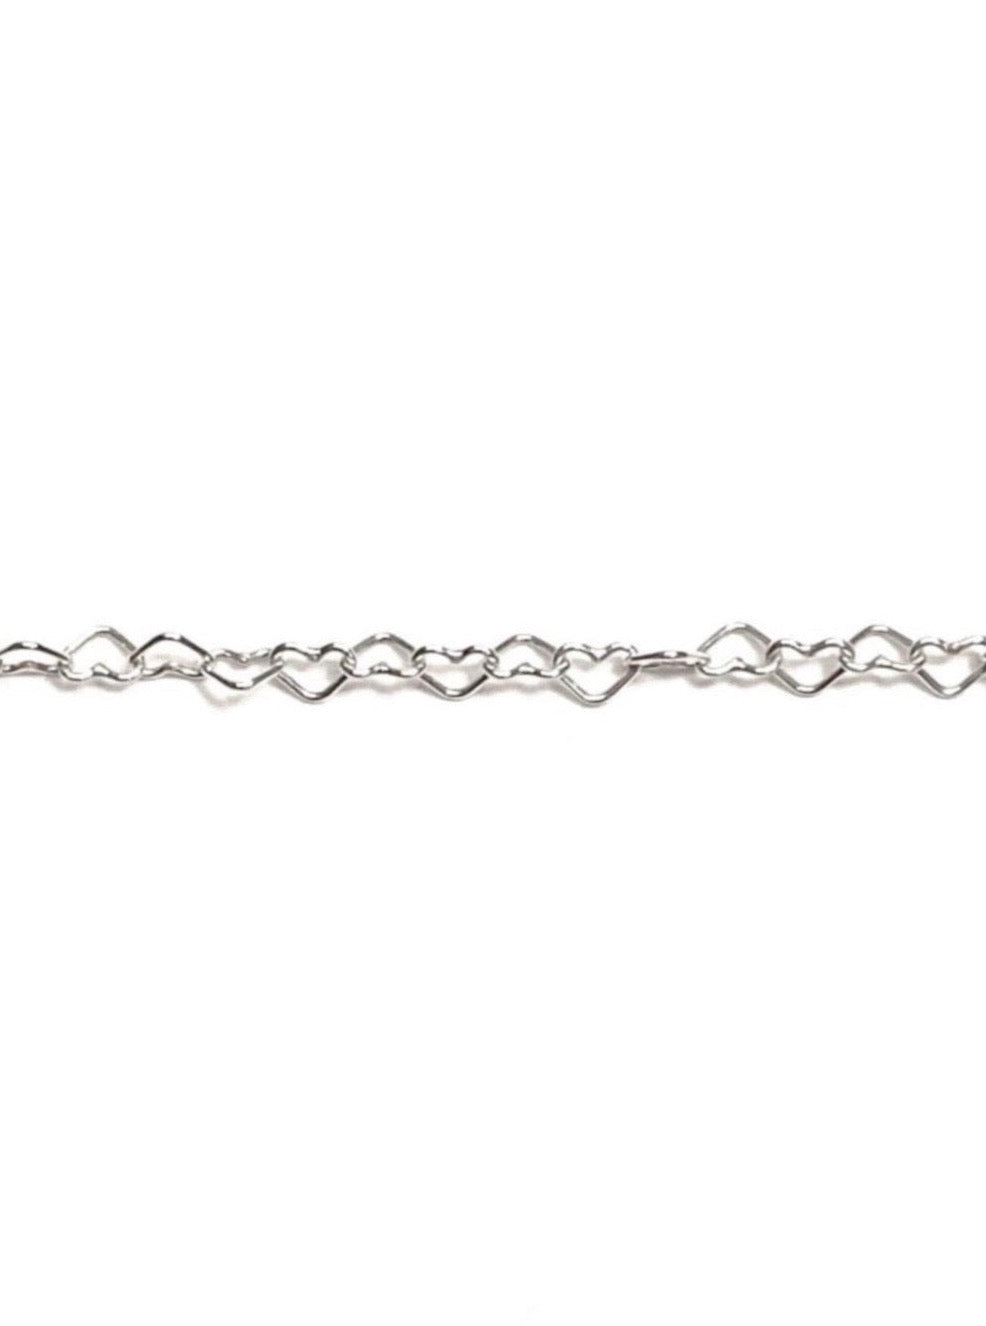 Sweetheart Chain in Sterling Silver